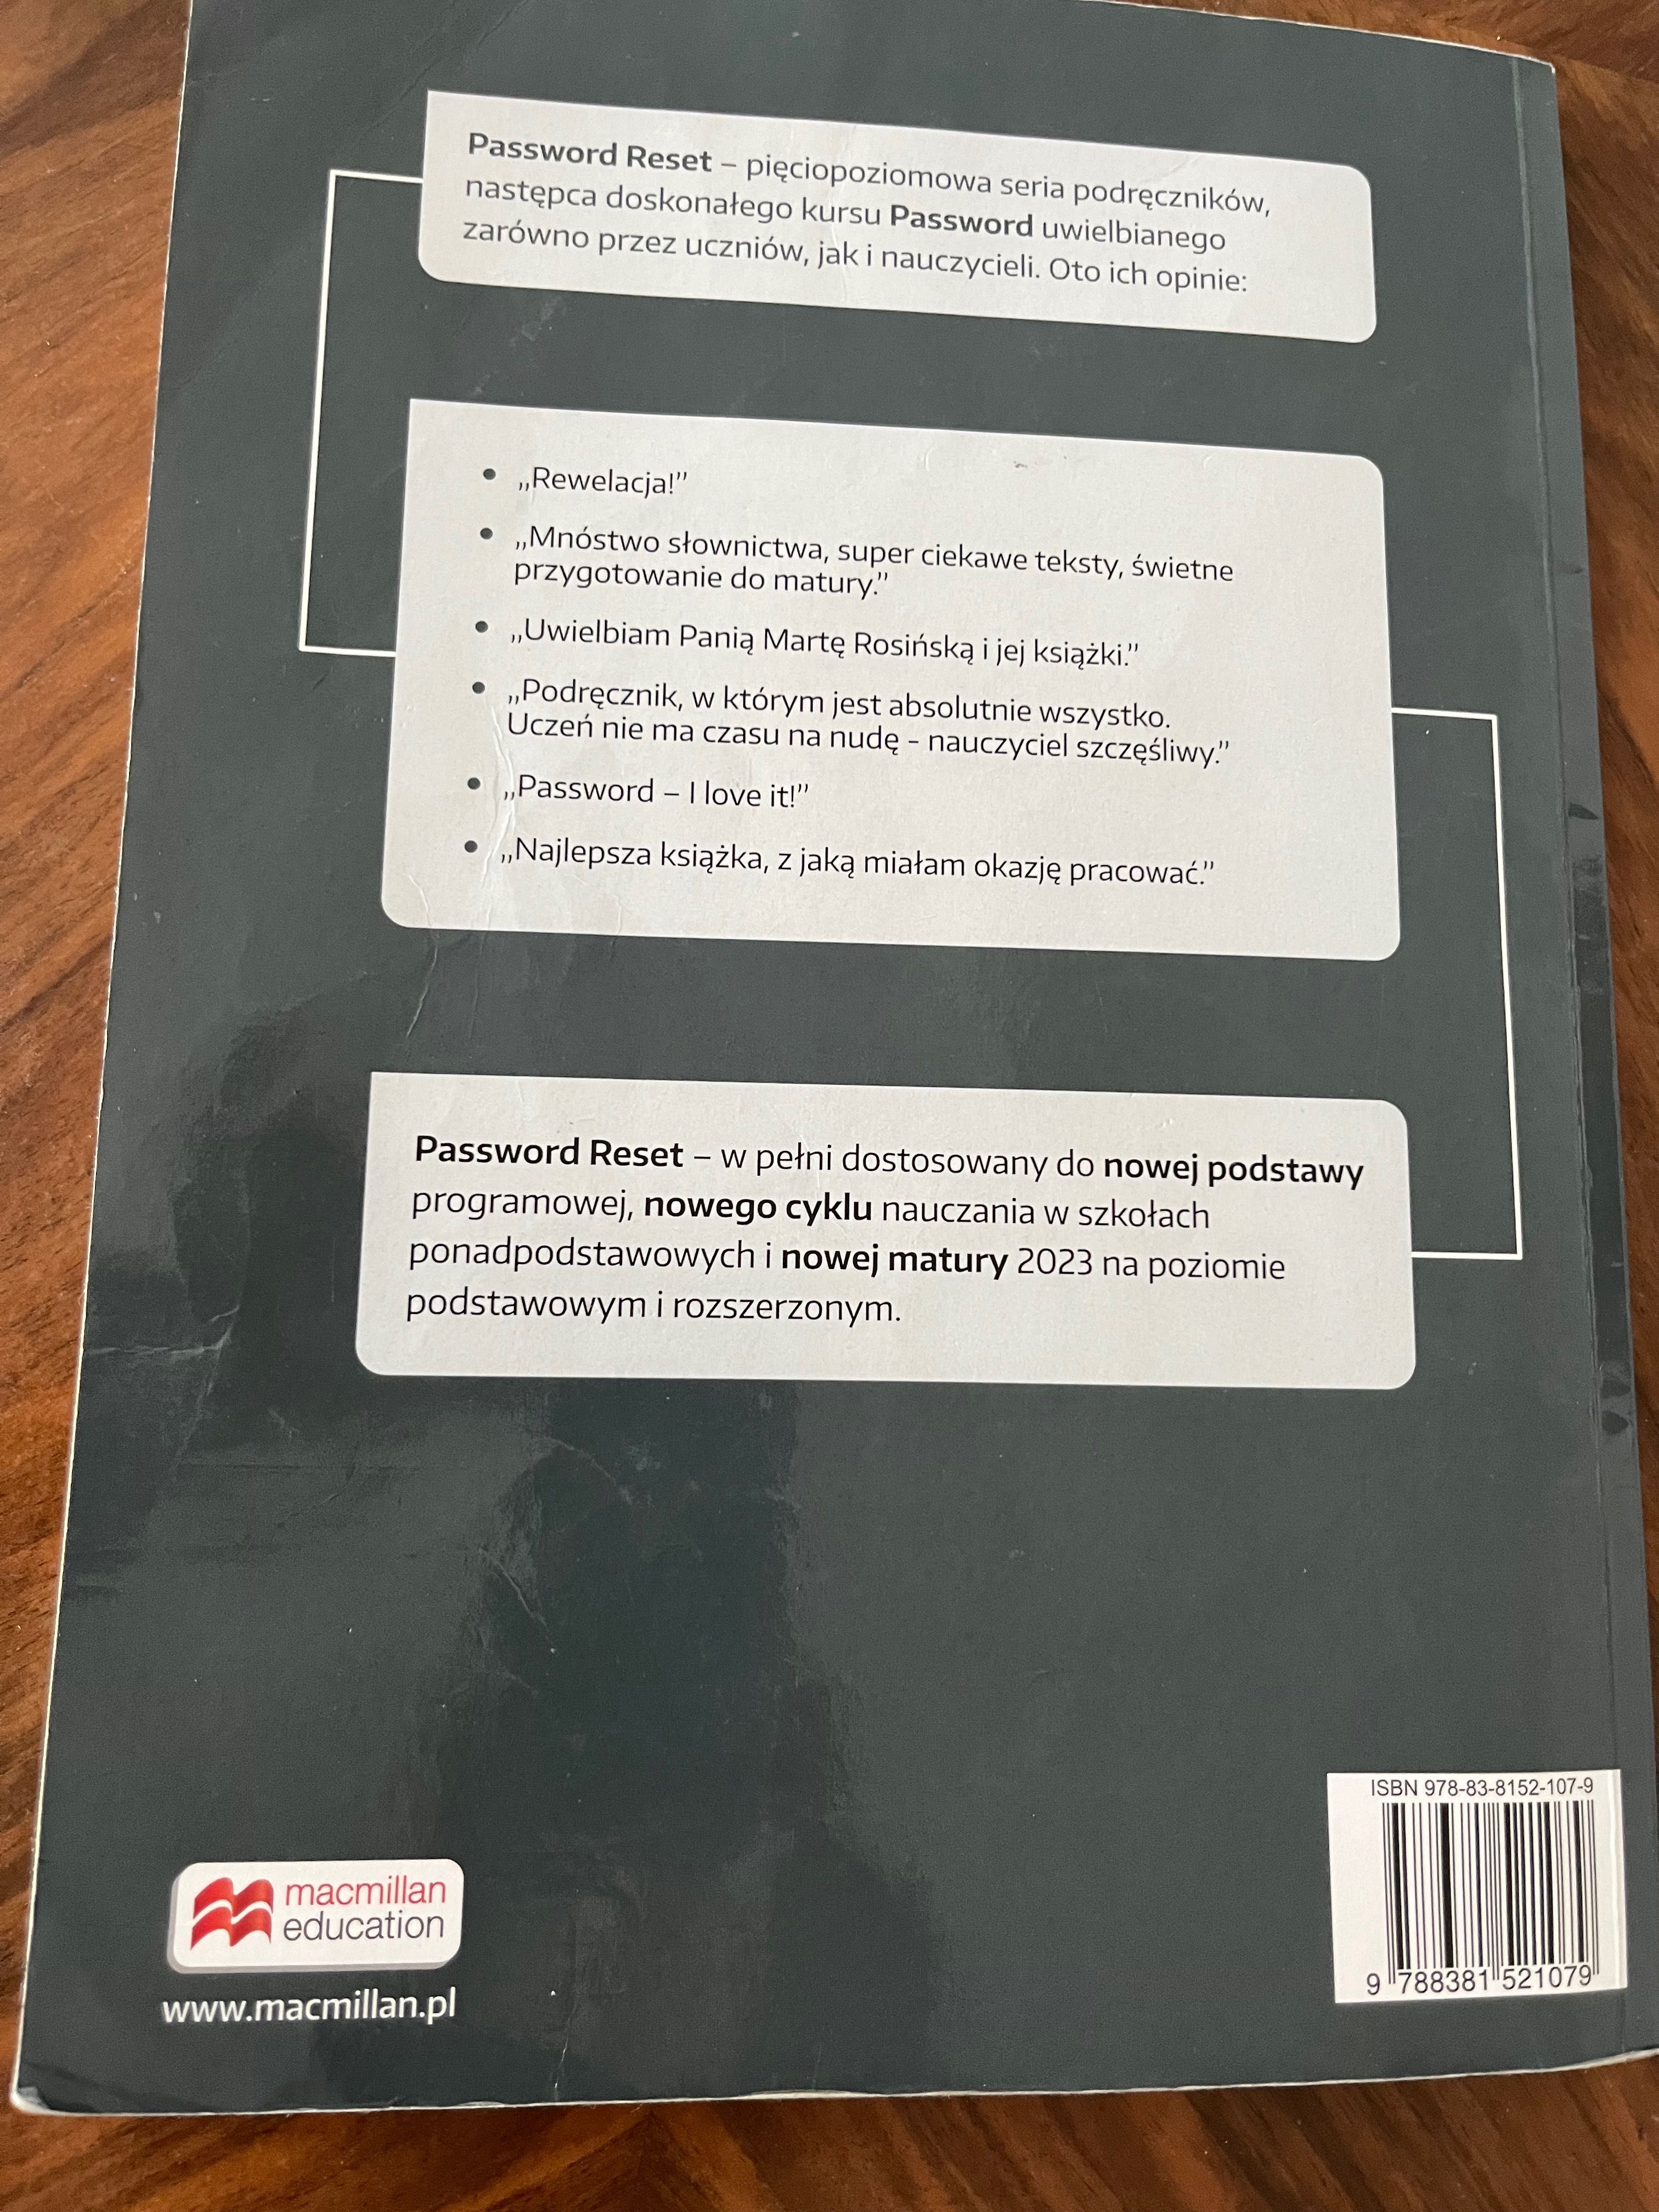 Password Reset B2 podręcznik. Macmillan nowa podstawa